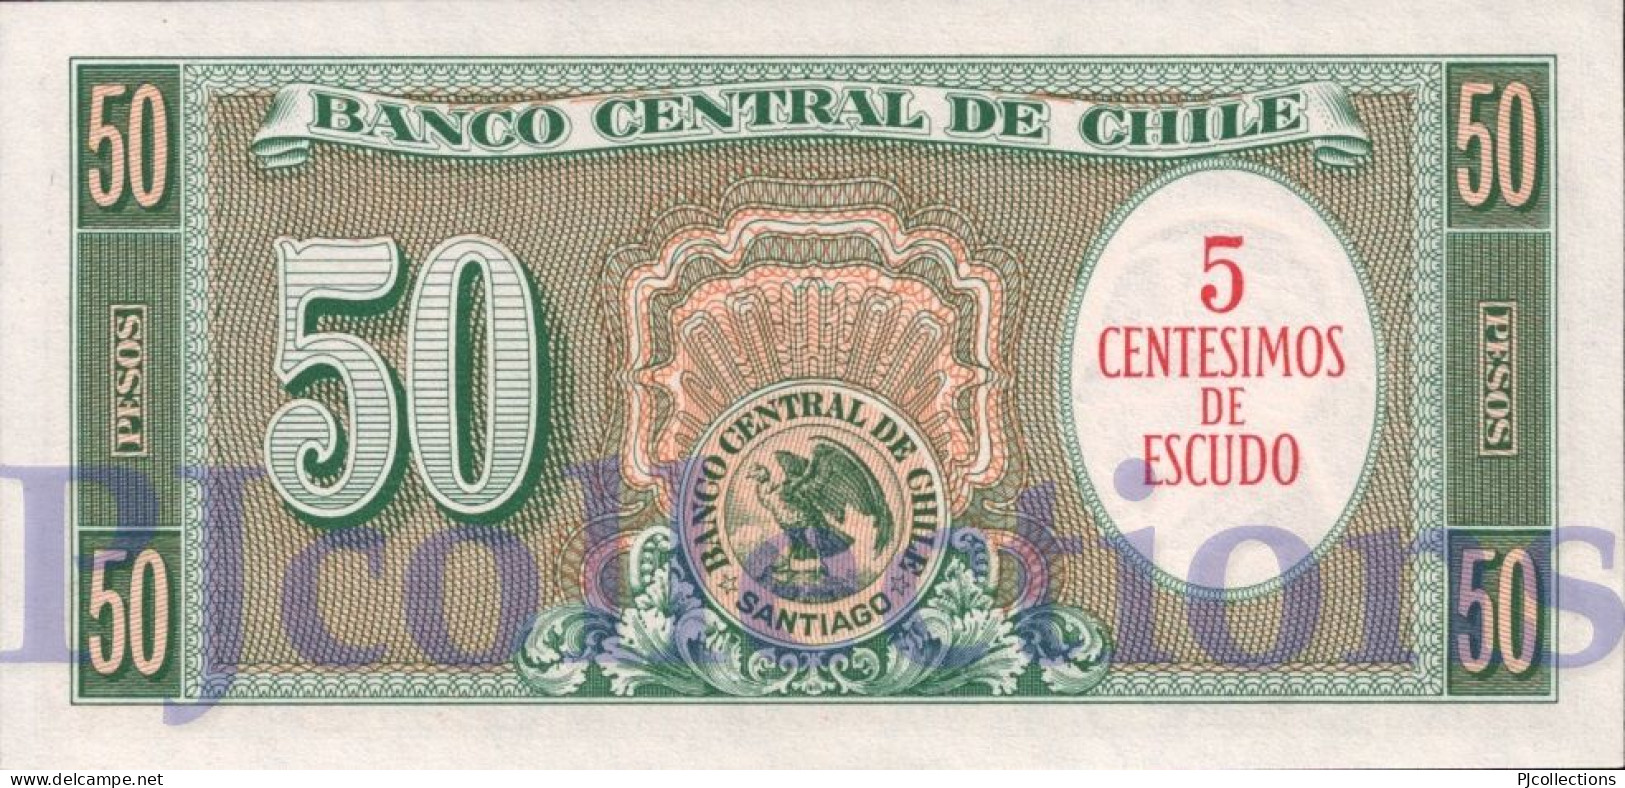 CHILE 5 CENTESIMOS 1960/1961 PICK 126b UNC - Chile